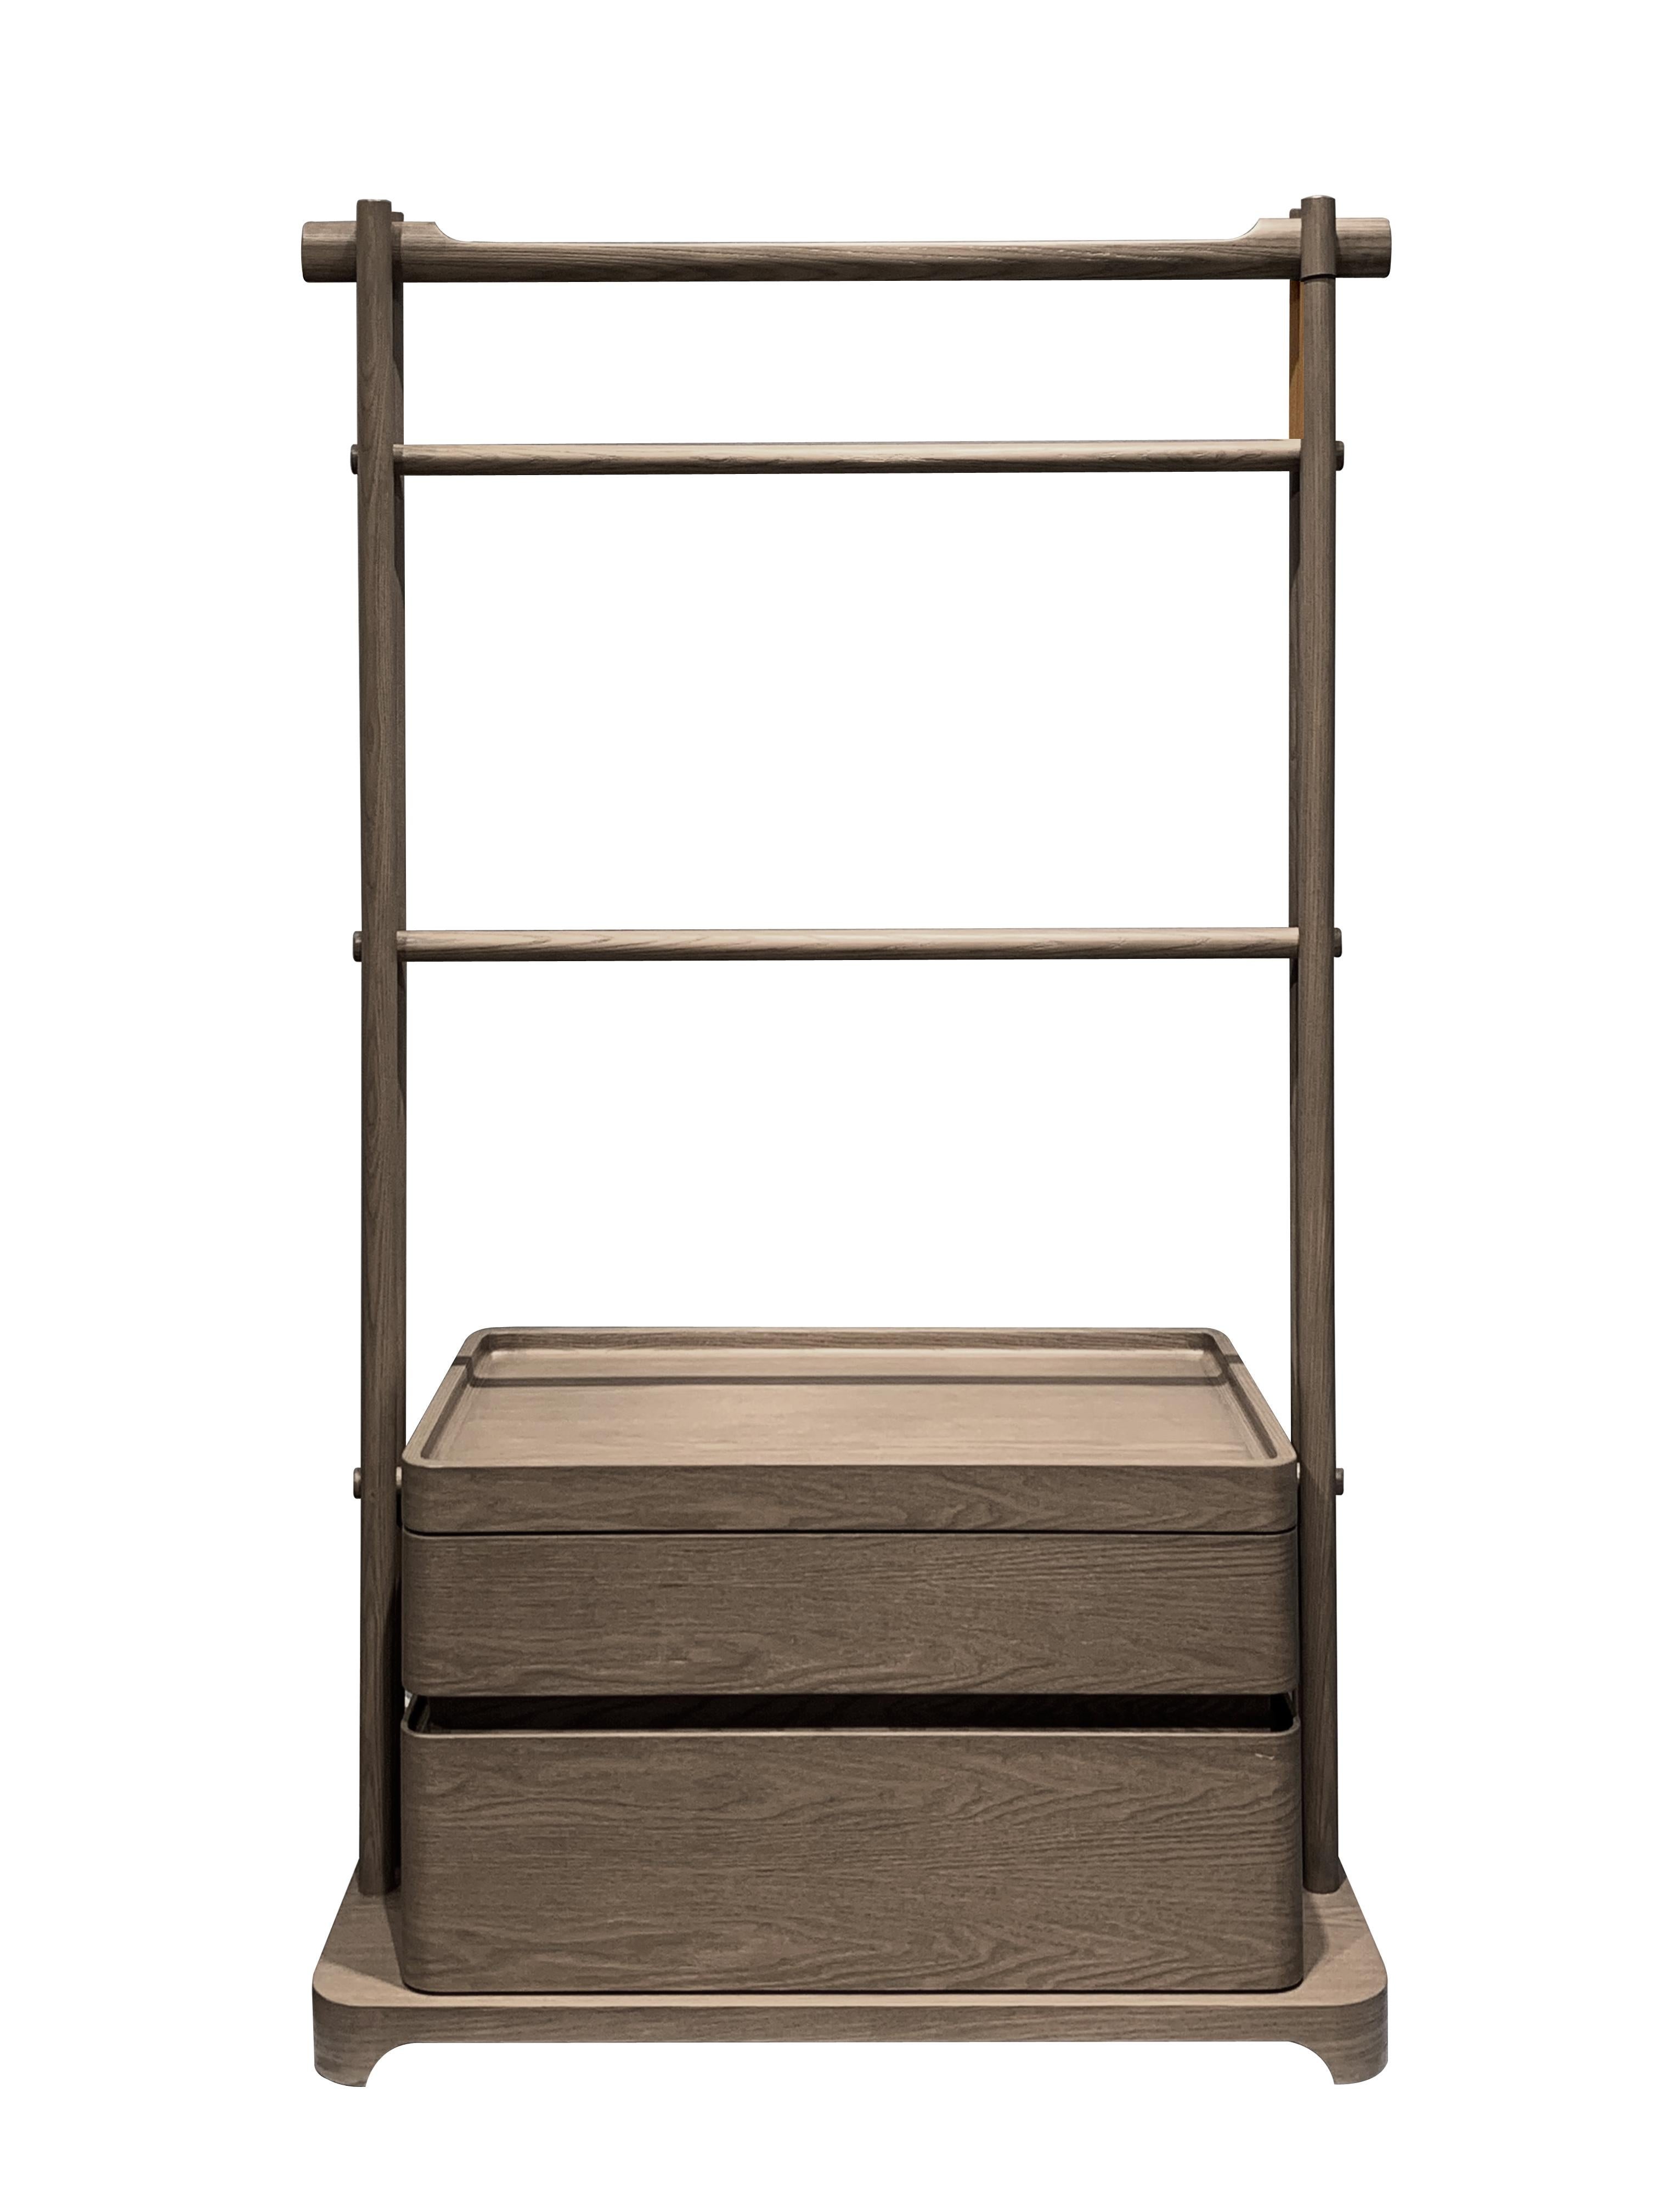 Description: Scarf stand low
Color: Grey
Size: 92 x 42 x 140 H cm
Material: Oak
Collection: Interlock